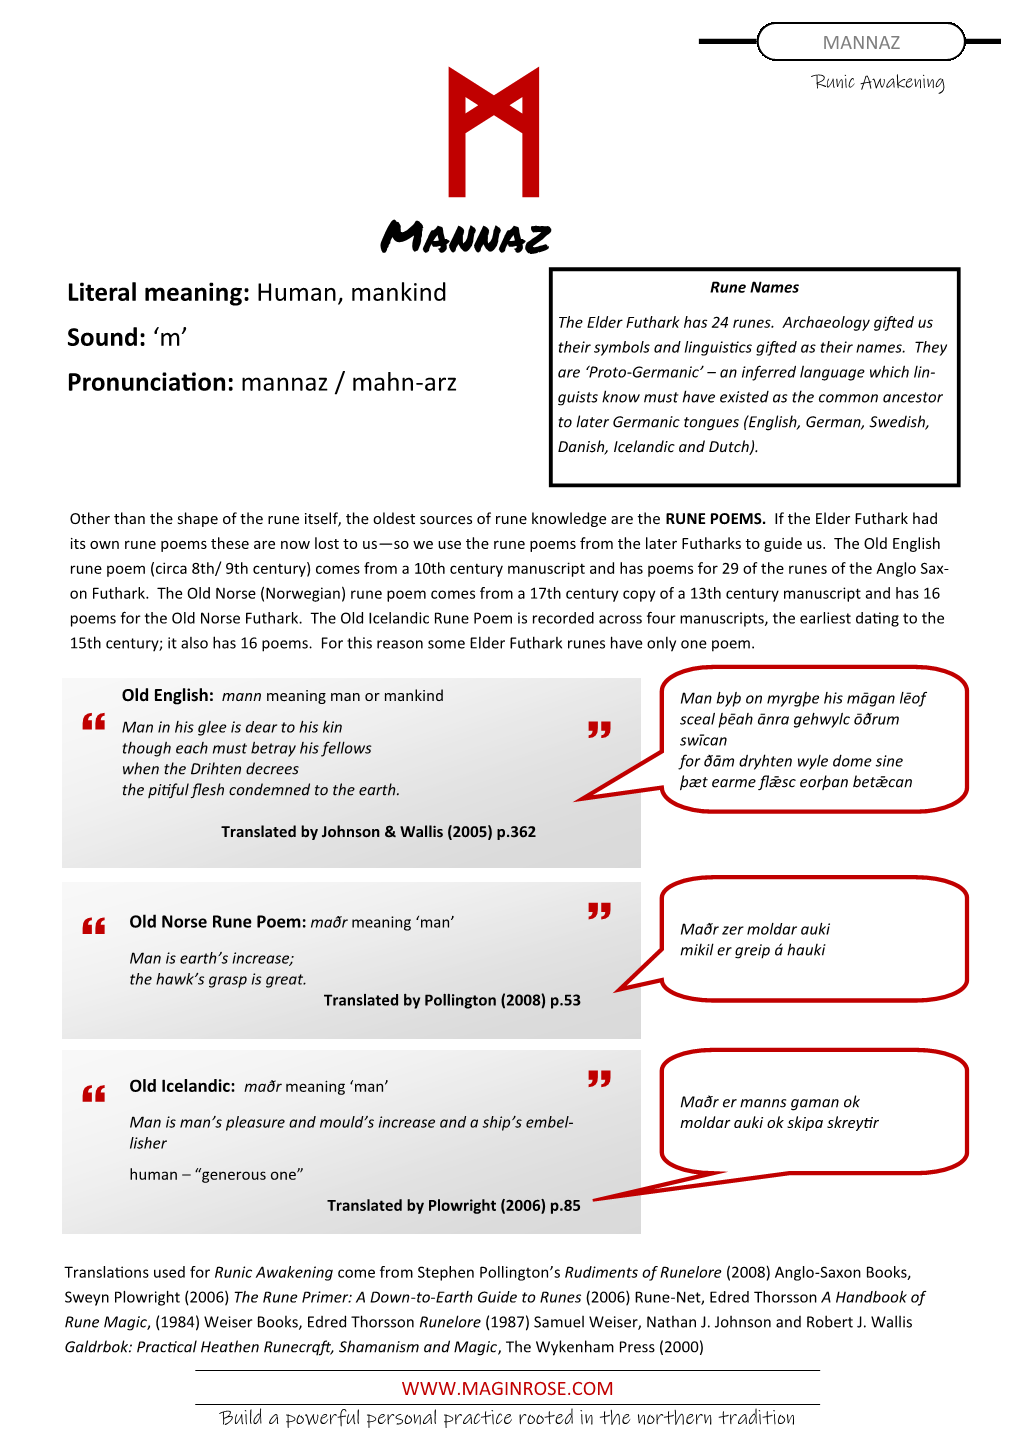 MANNAZ M Runic Awakening Mannaz Literal Meaning: Human, Mankind Rune Names the Elder Futhark Has 24 Runes